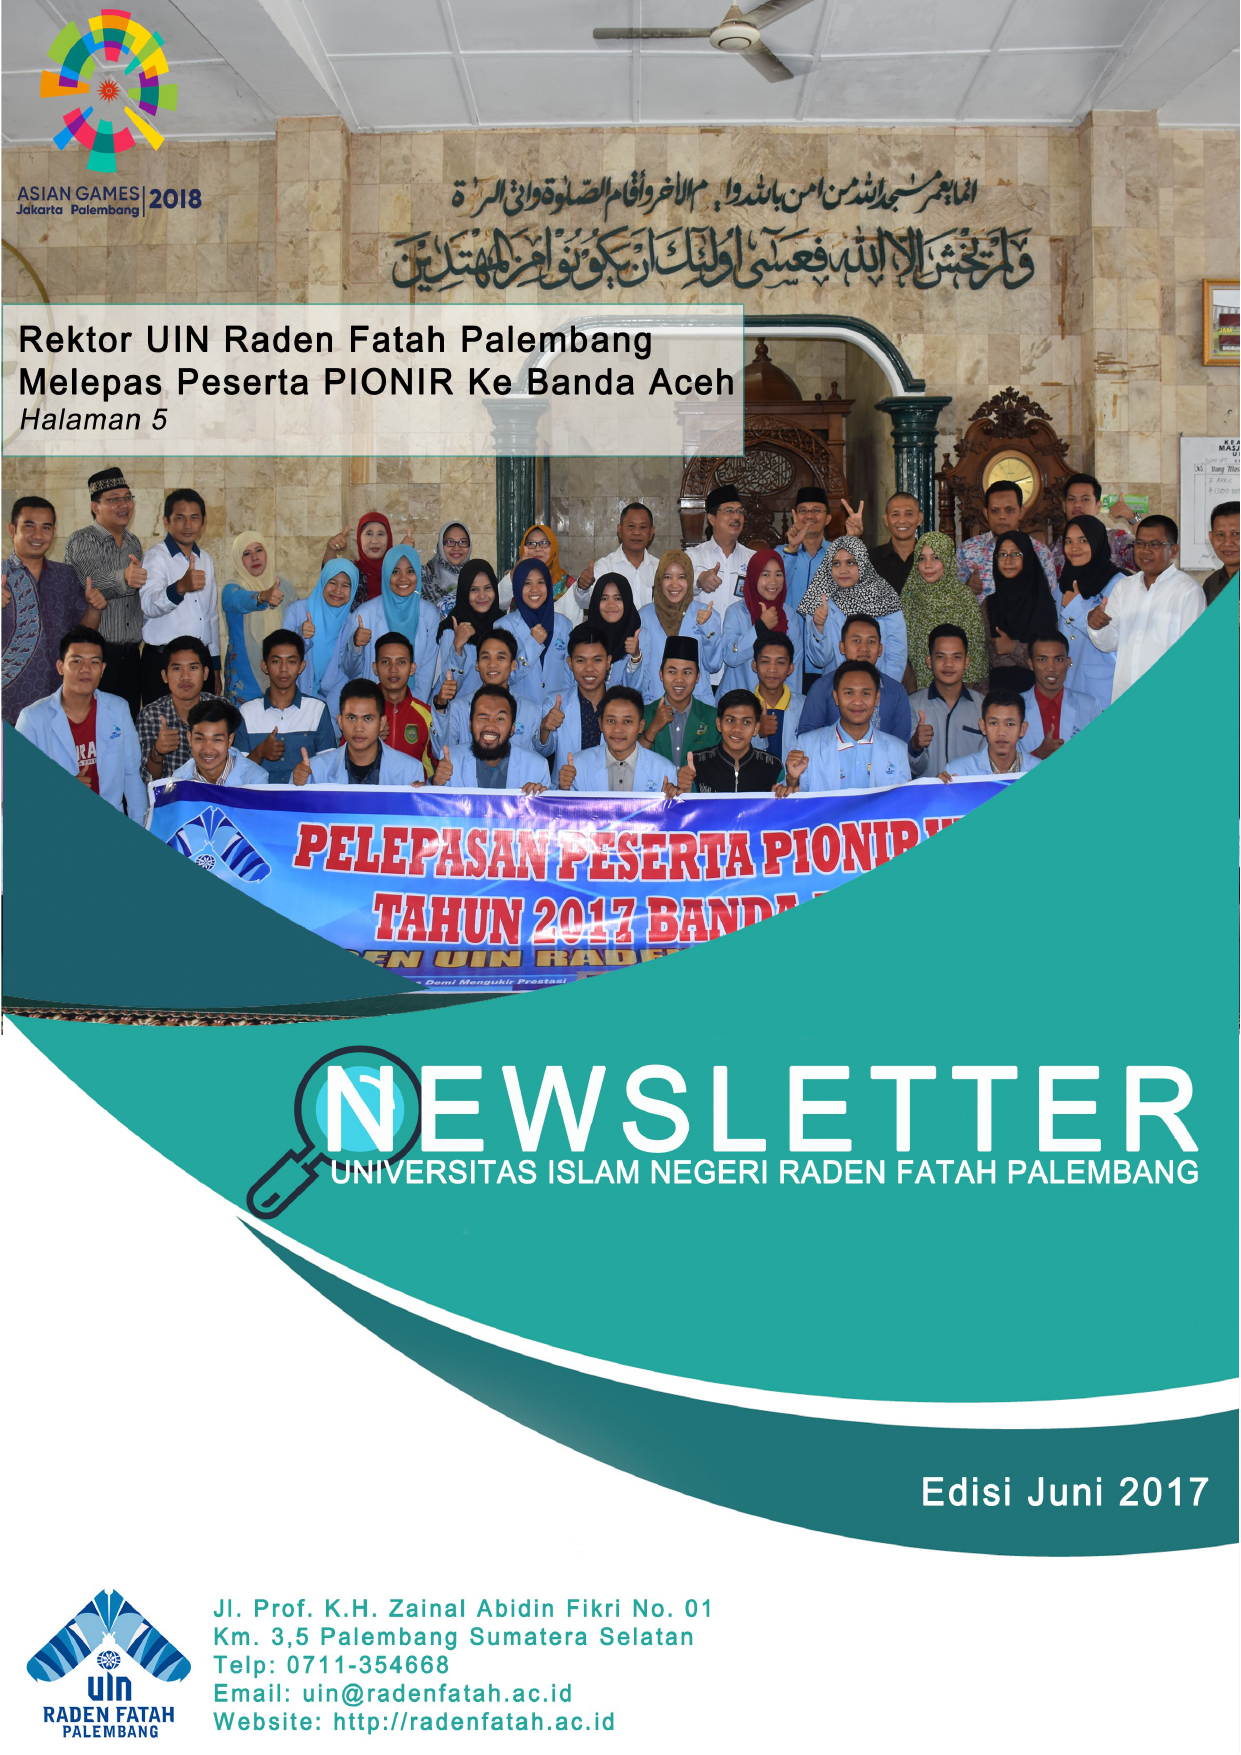 Edisi Juni 2017 Dewan Redaksi Newsletter Universitas Islam Negeri Raden Fatah Palembang Edisi Juni 2017 Penanggungjawab Prof Drs M Sirozi M A